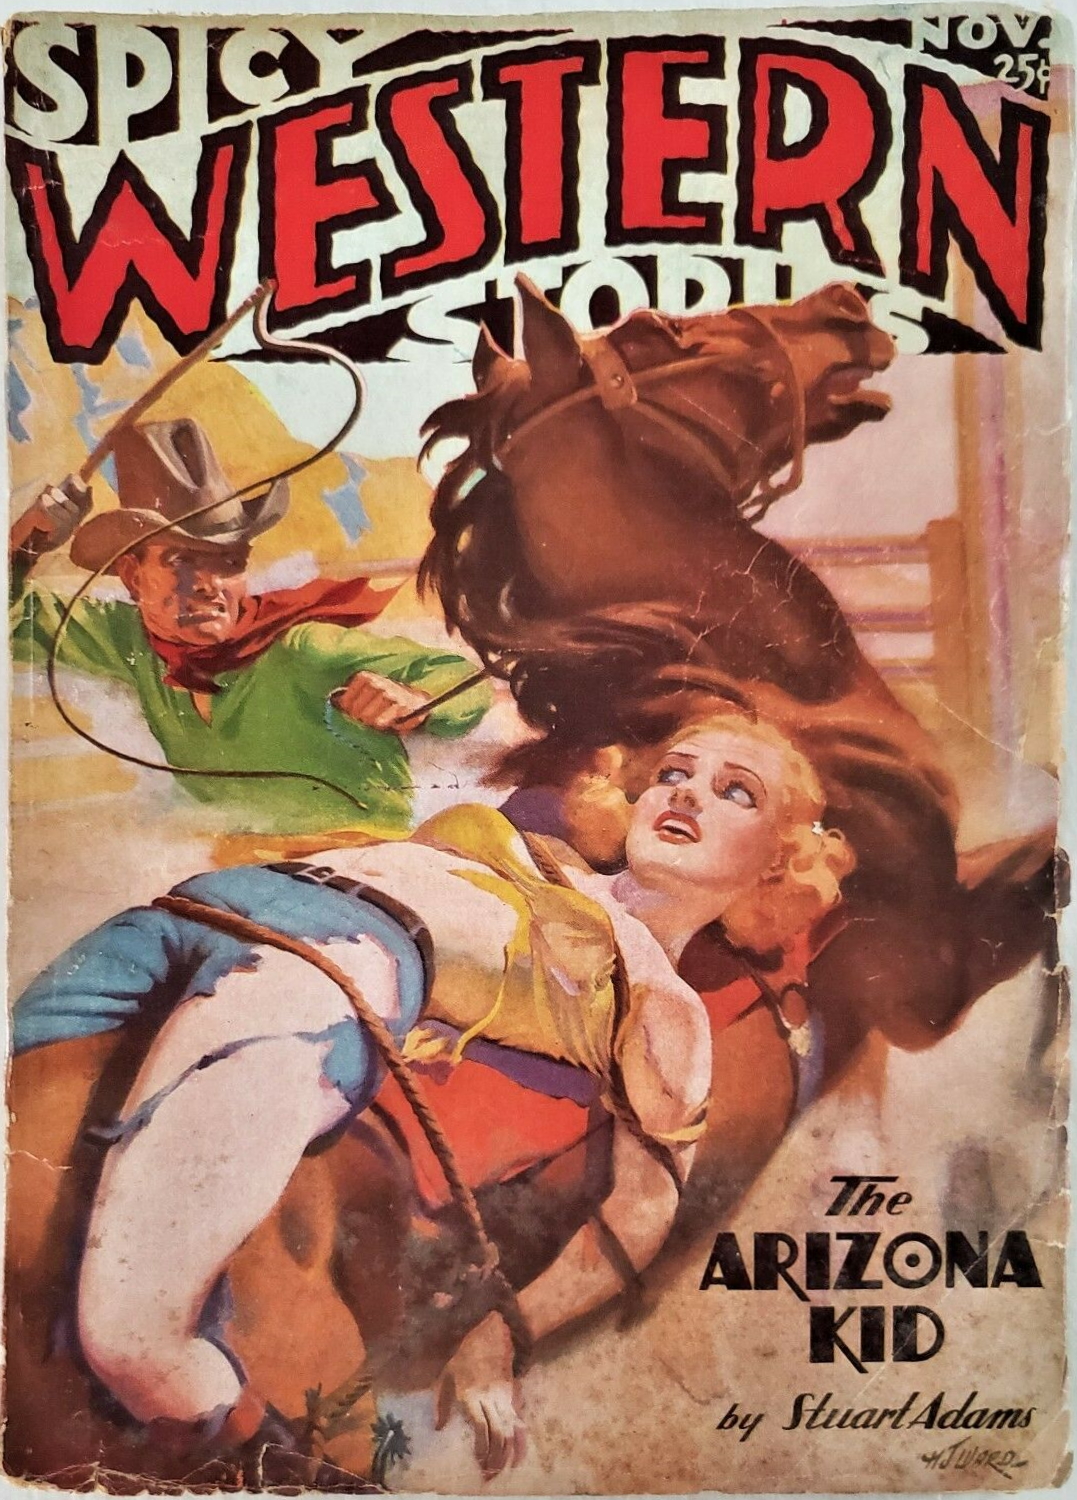 Spicy Western Stories - November 1936